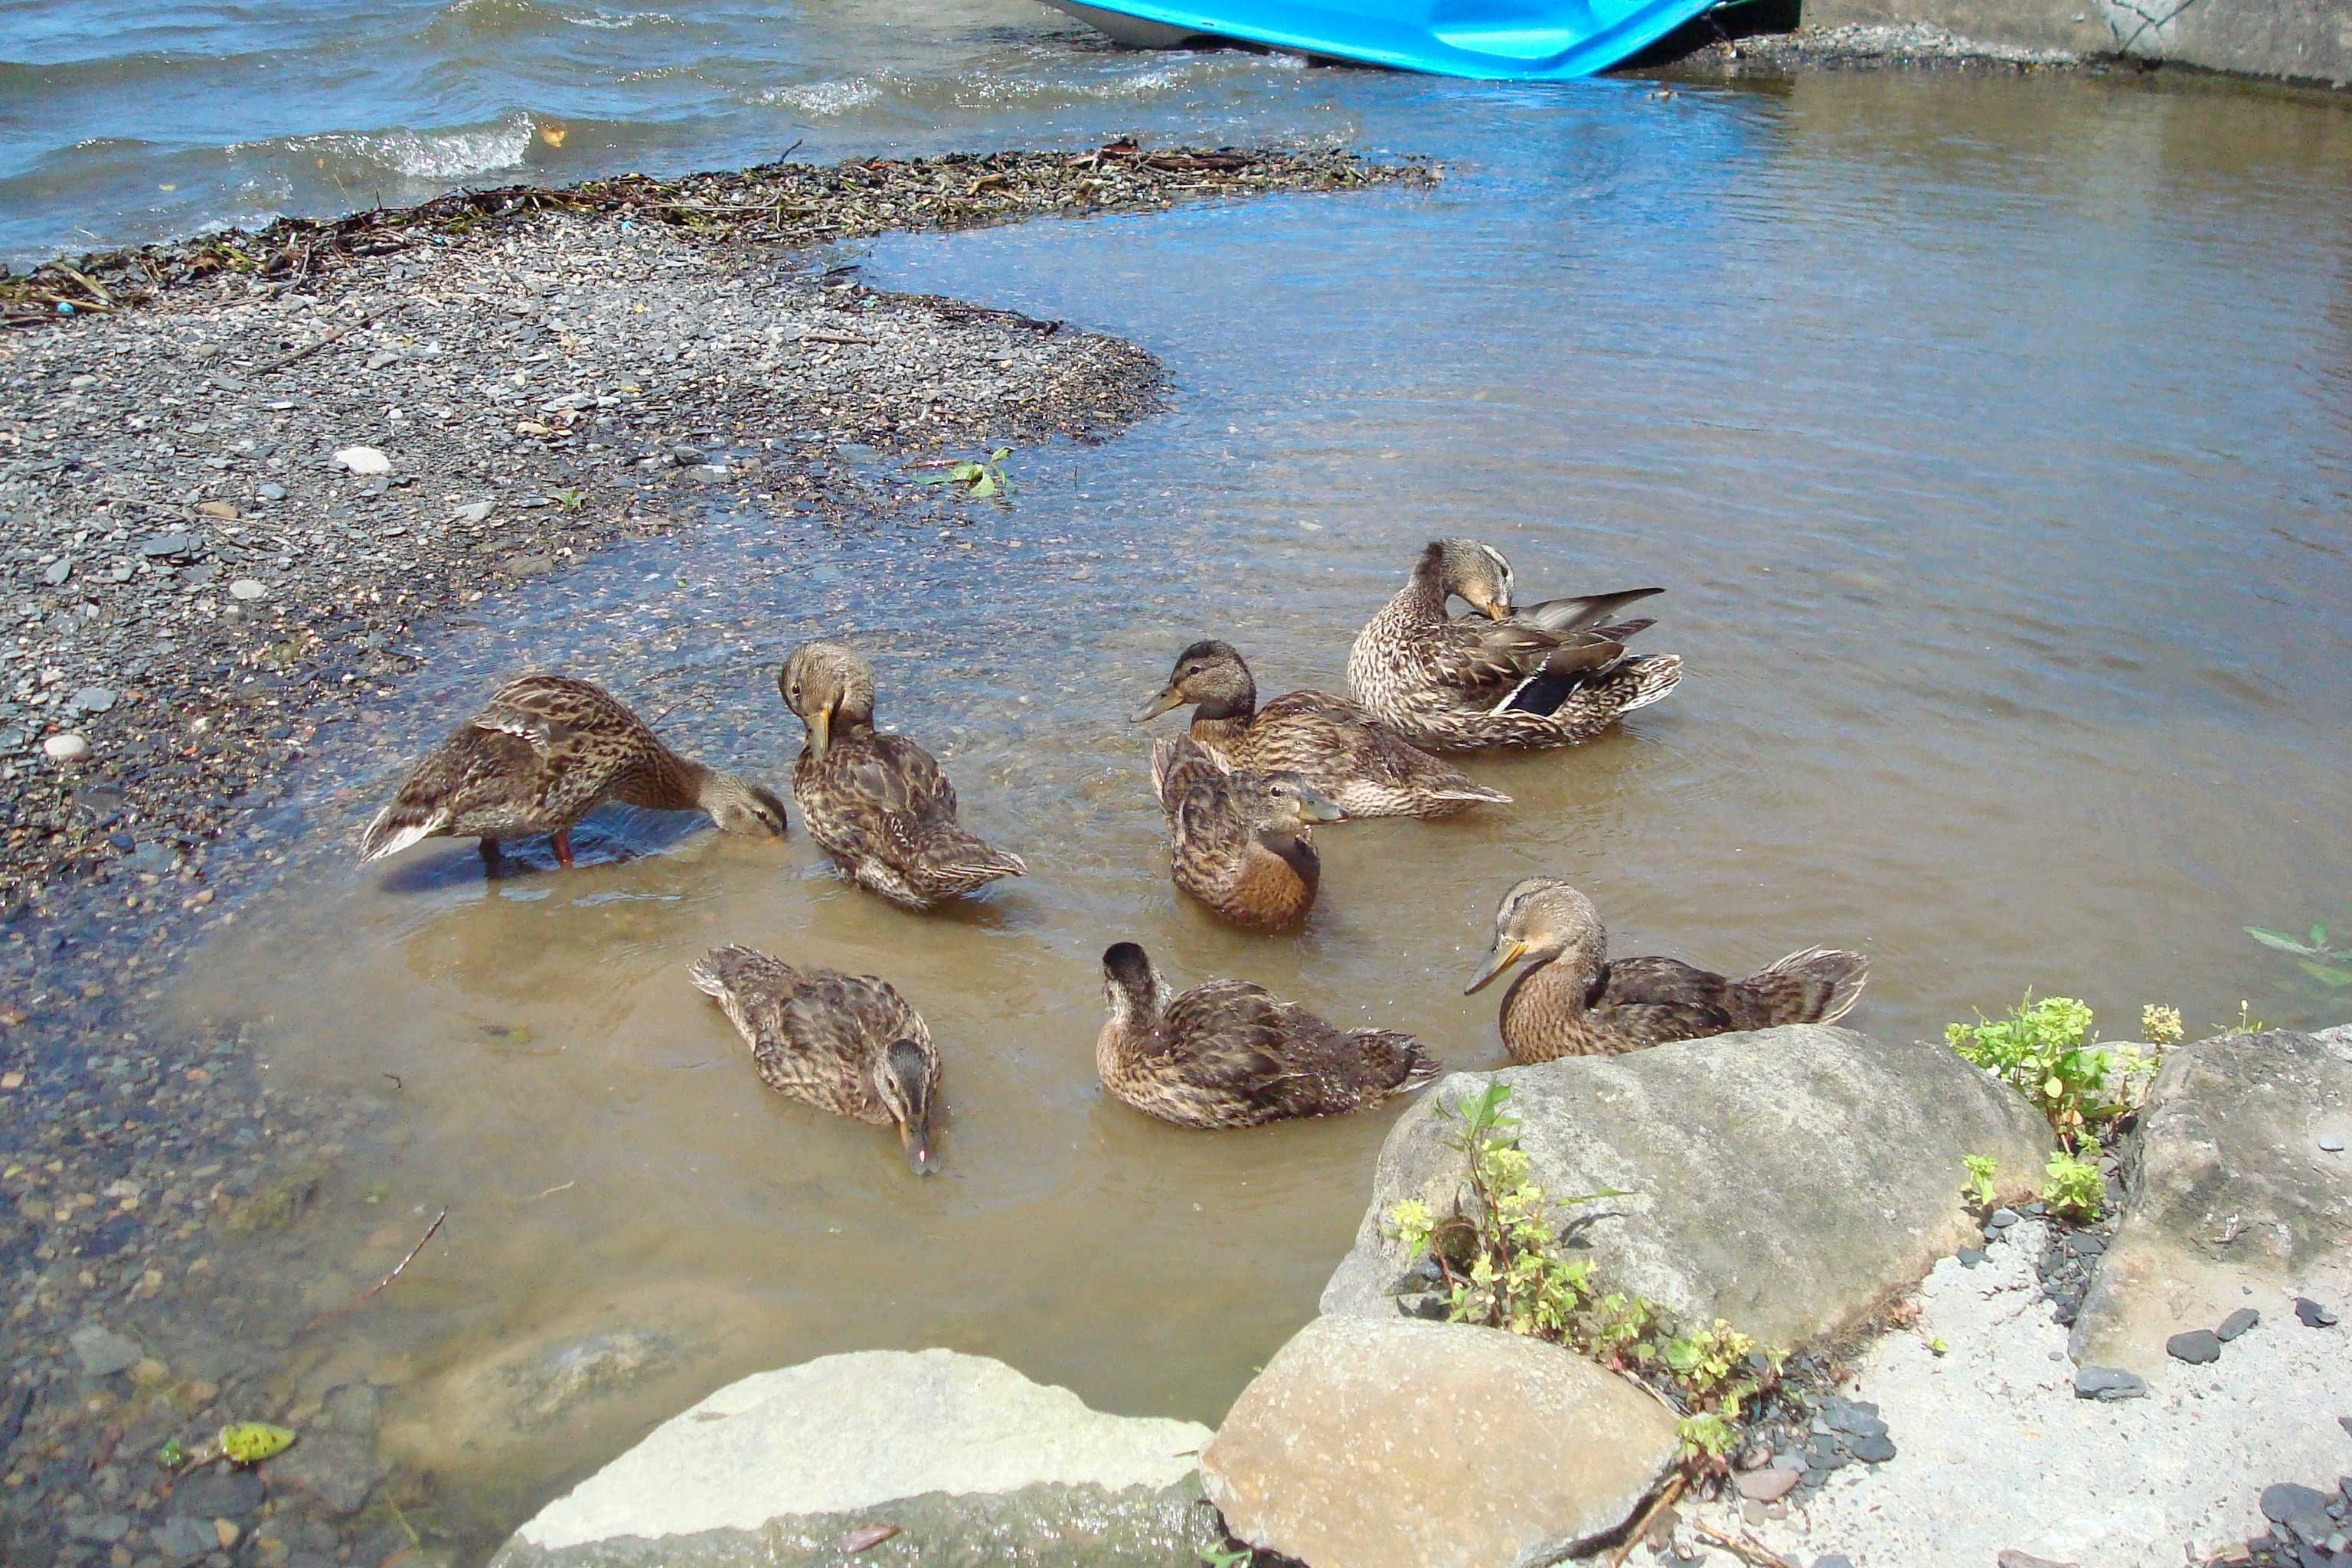 Ducks bathing